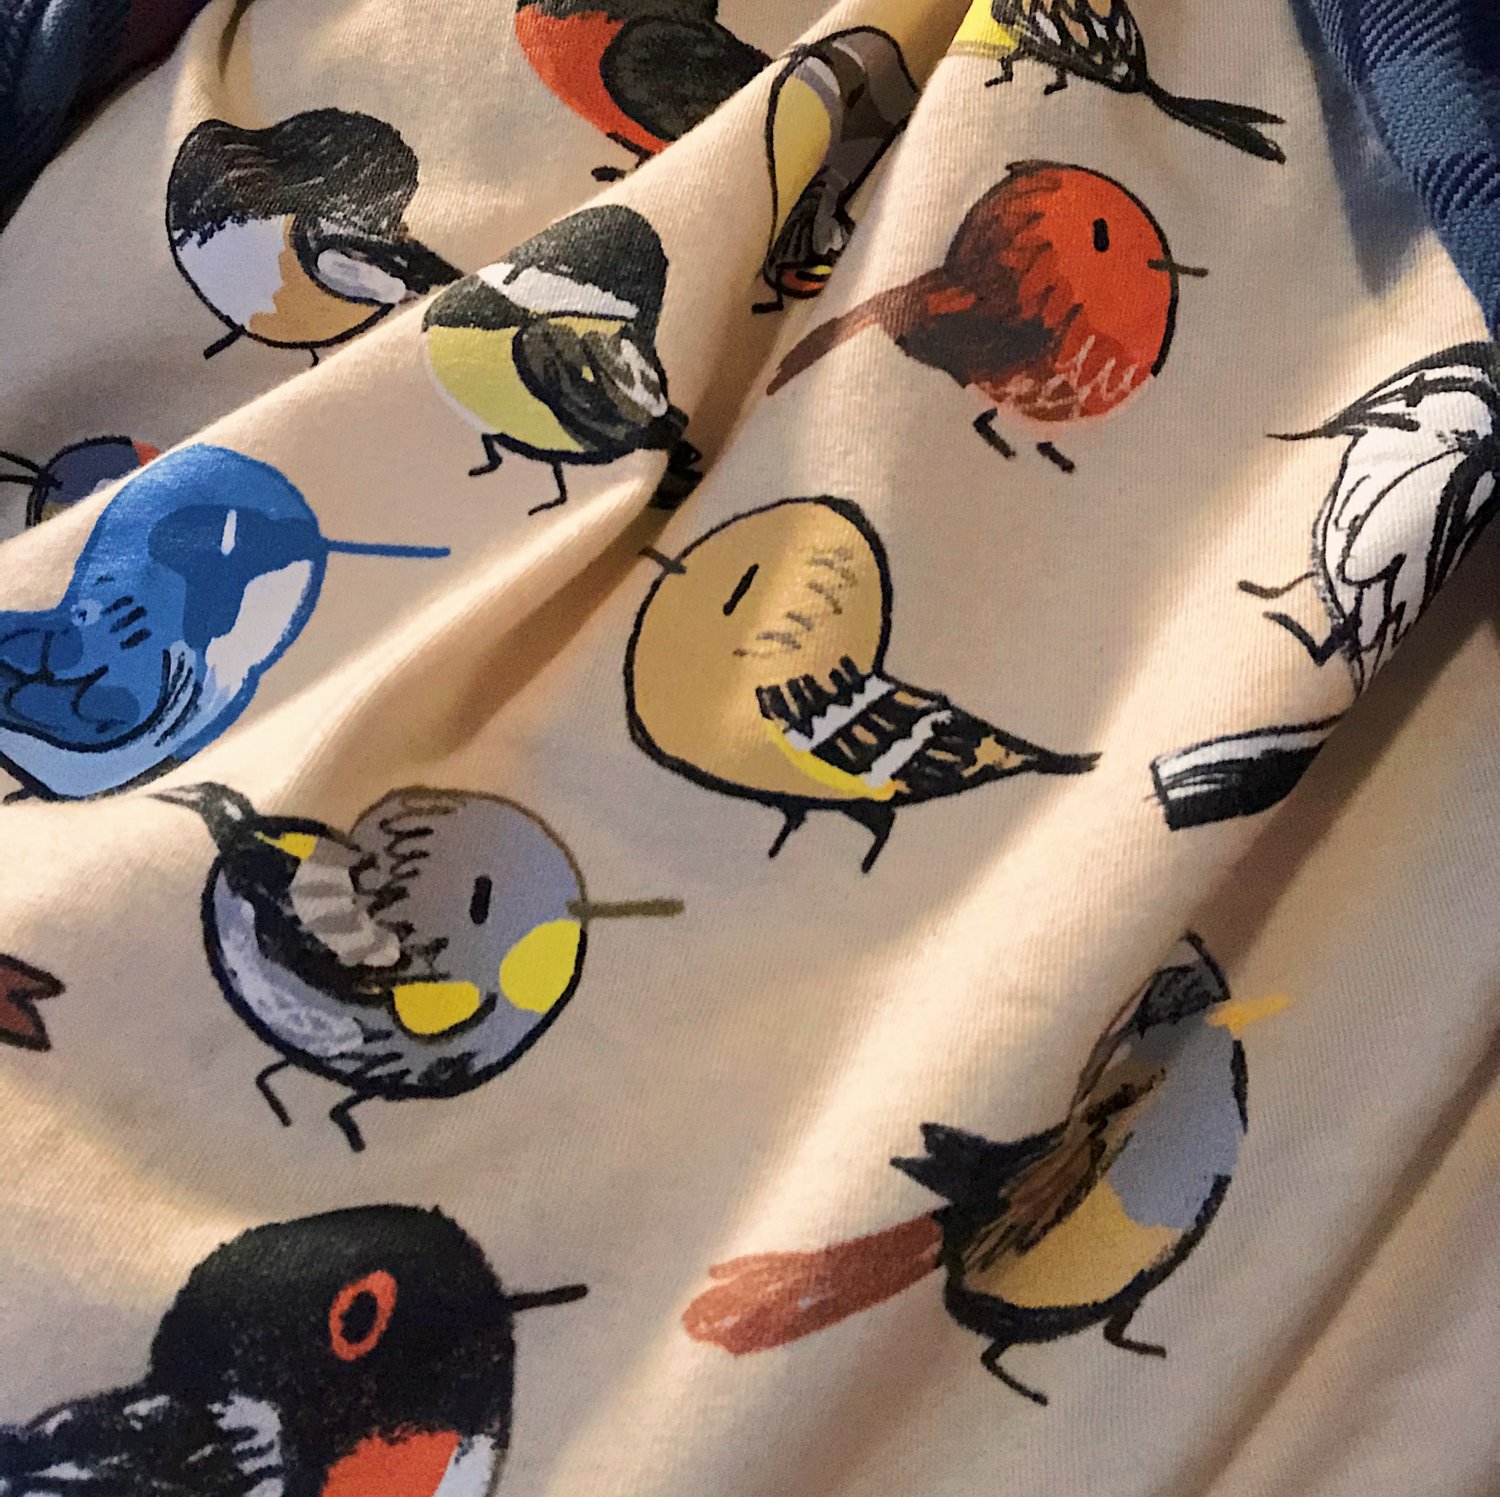 Image of Backyard Birds Shirt